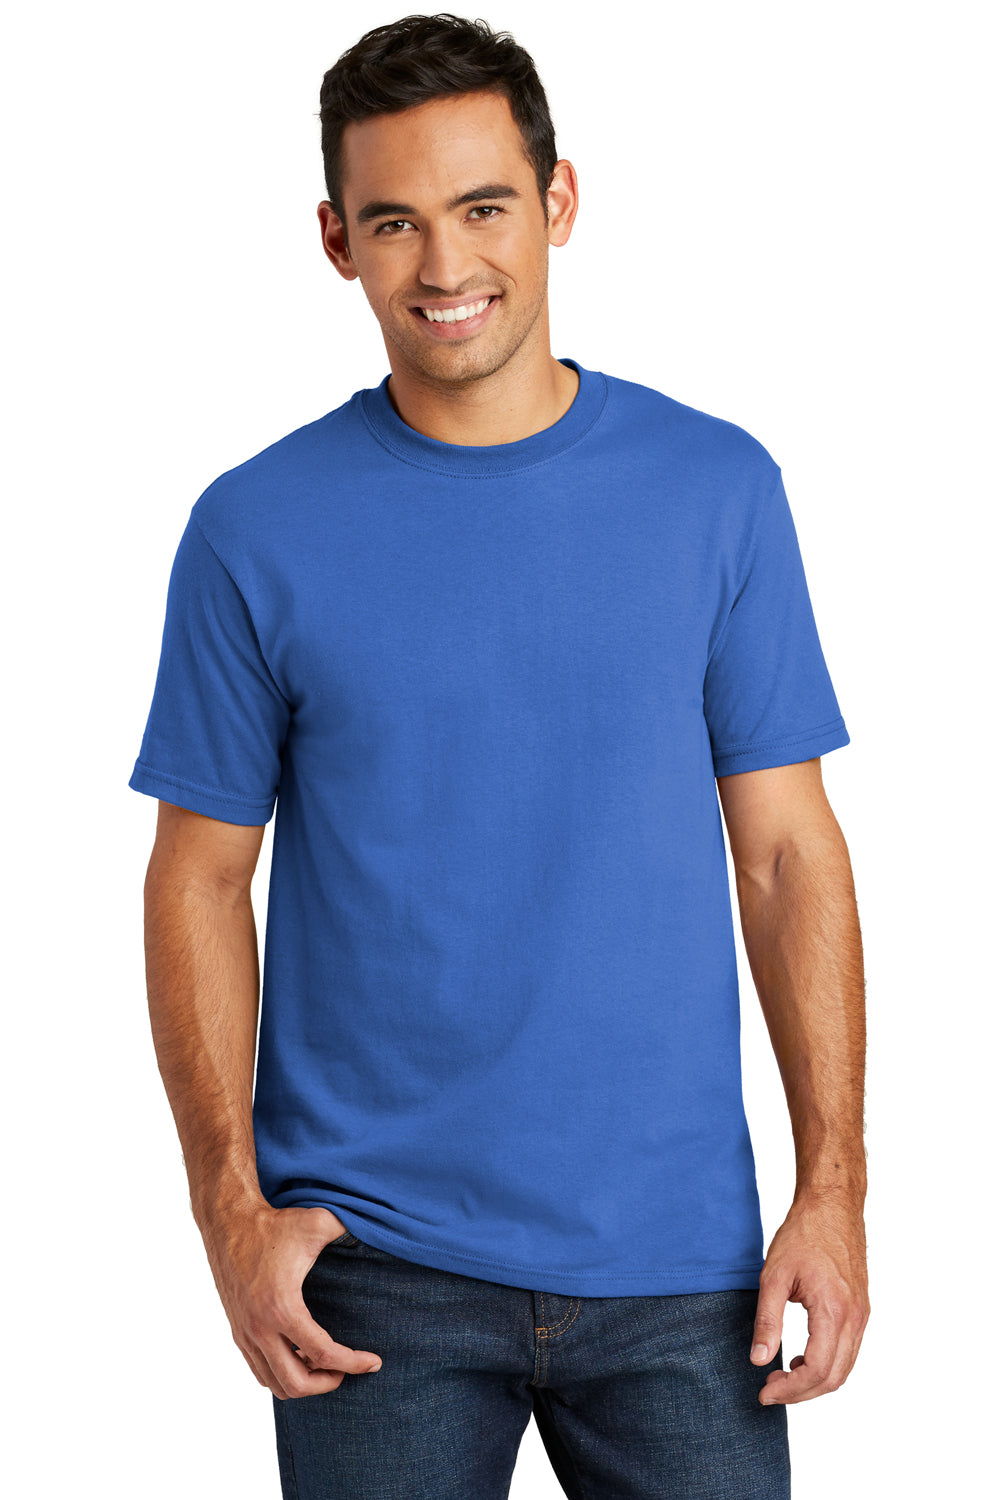 Port & Company USA100 Mens USA Made Short Sleeve Crewneck T-Shirt Royal Blue Front